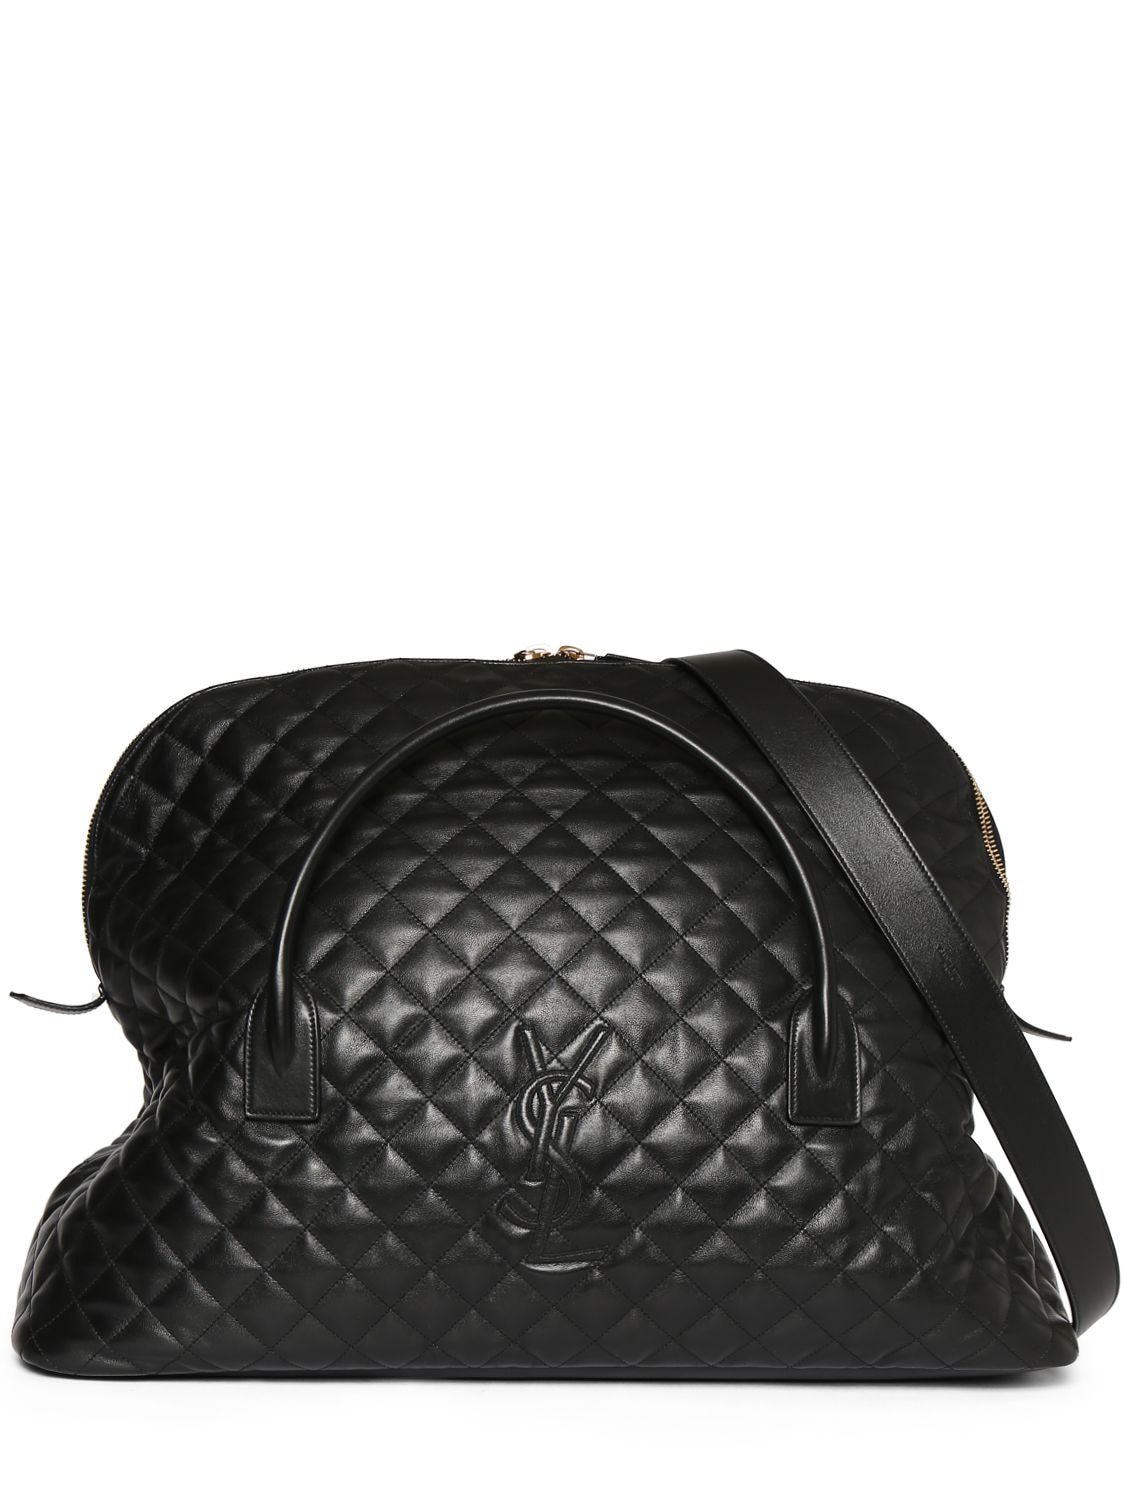 Saint Laurent Giant Leather Travel Bag In Black